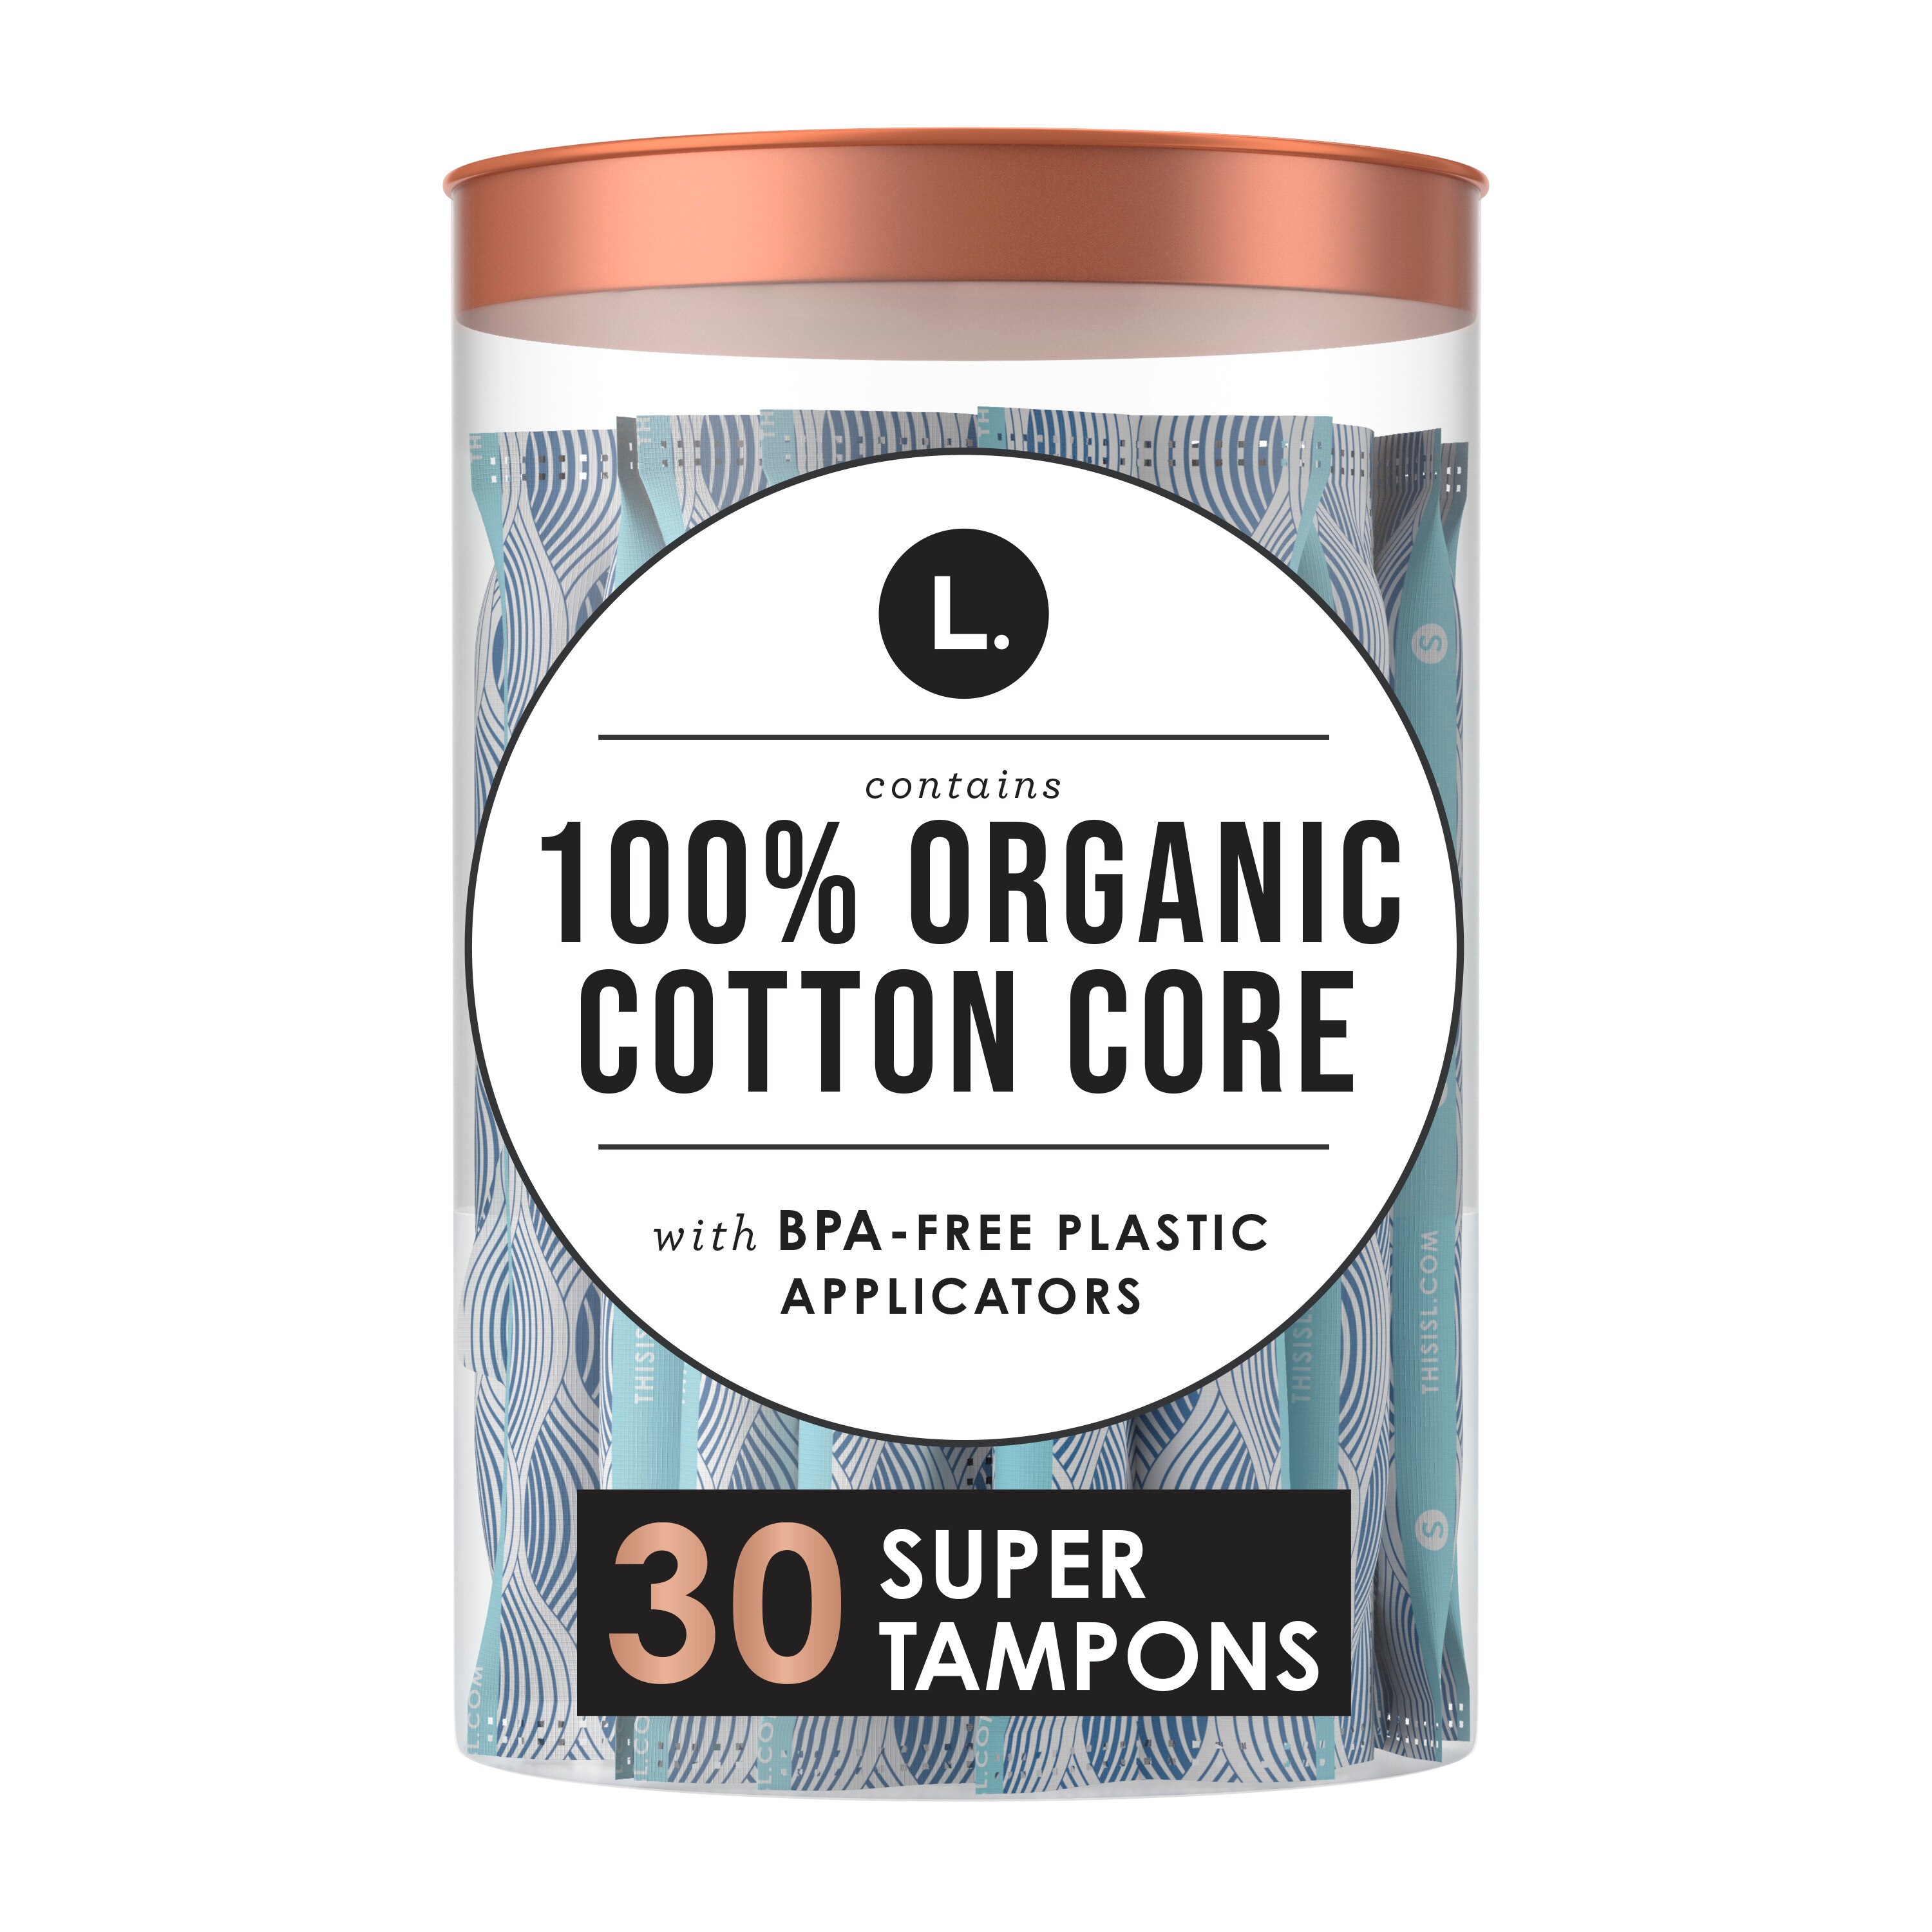 L. Organic Cotton Tampons, Super, 30 CT